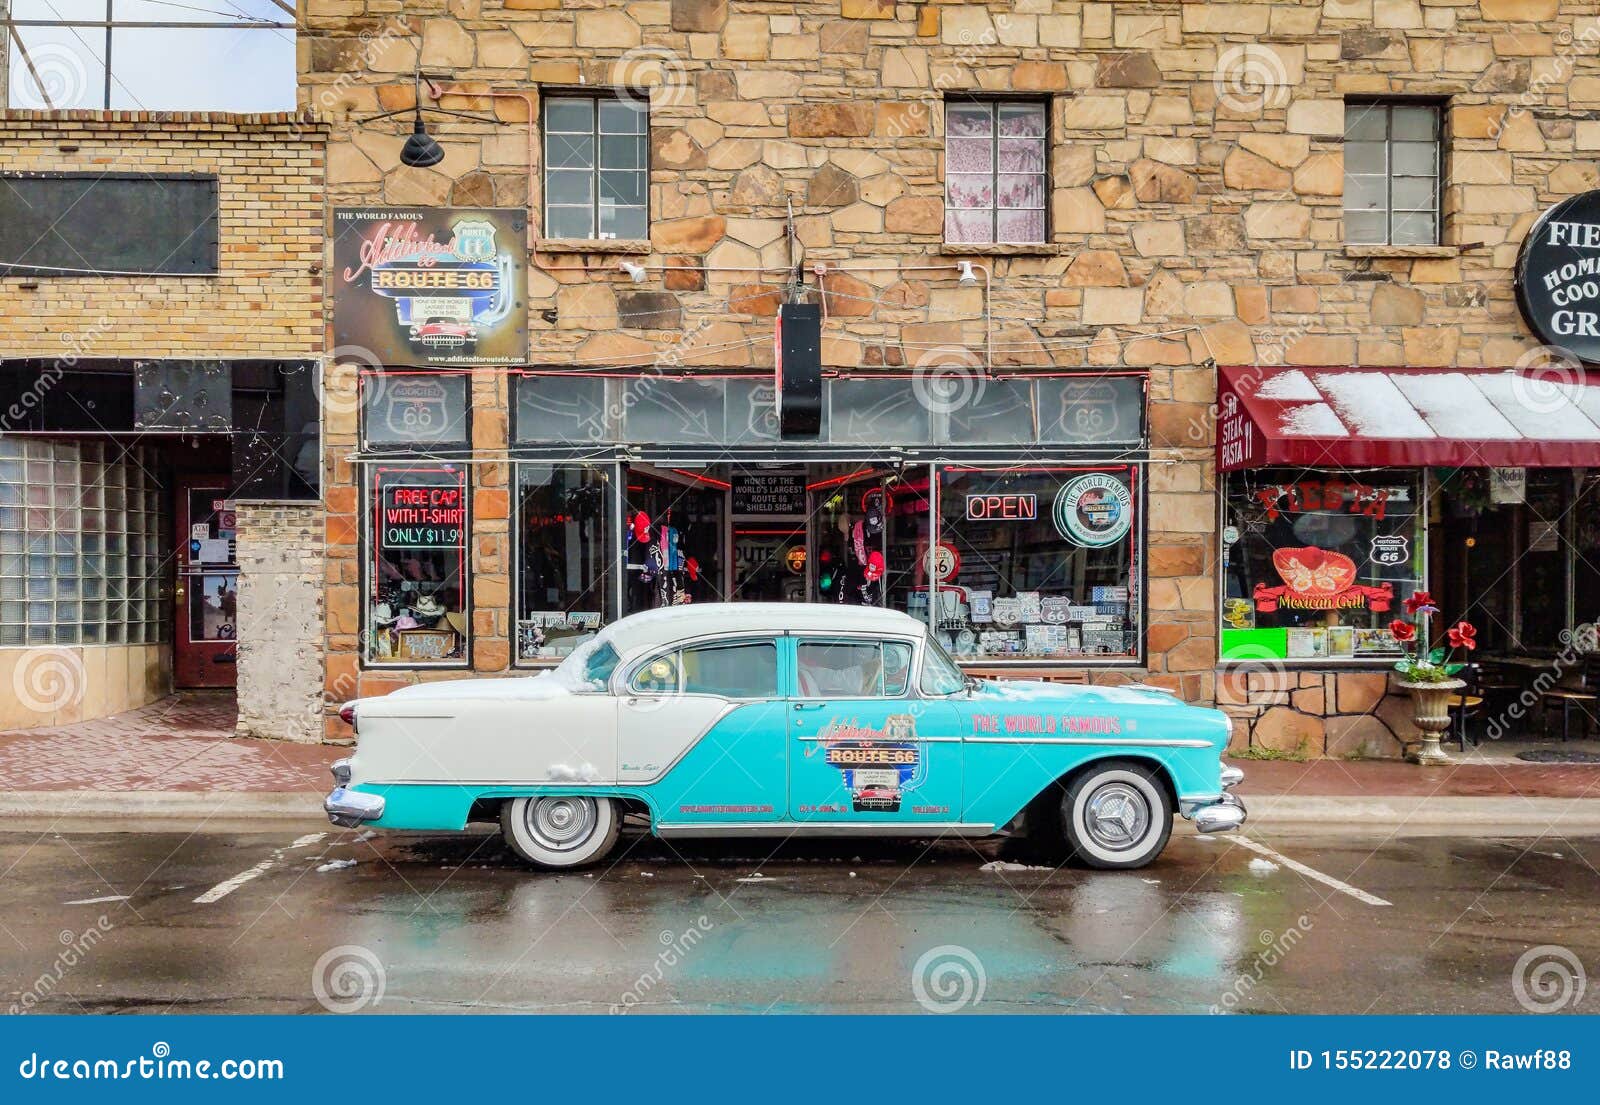 Antique car-old store front-Route 66-8x10 photo 